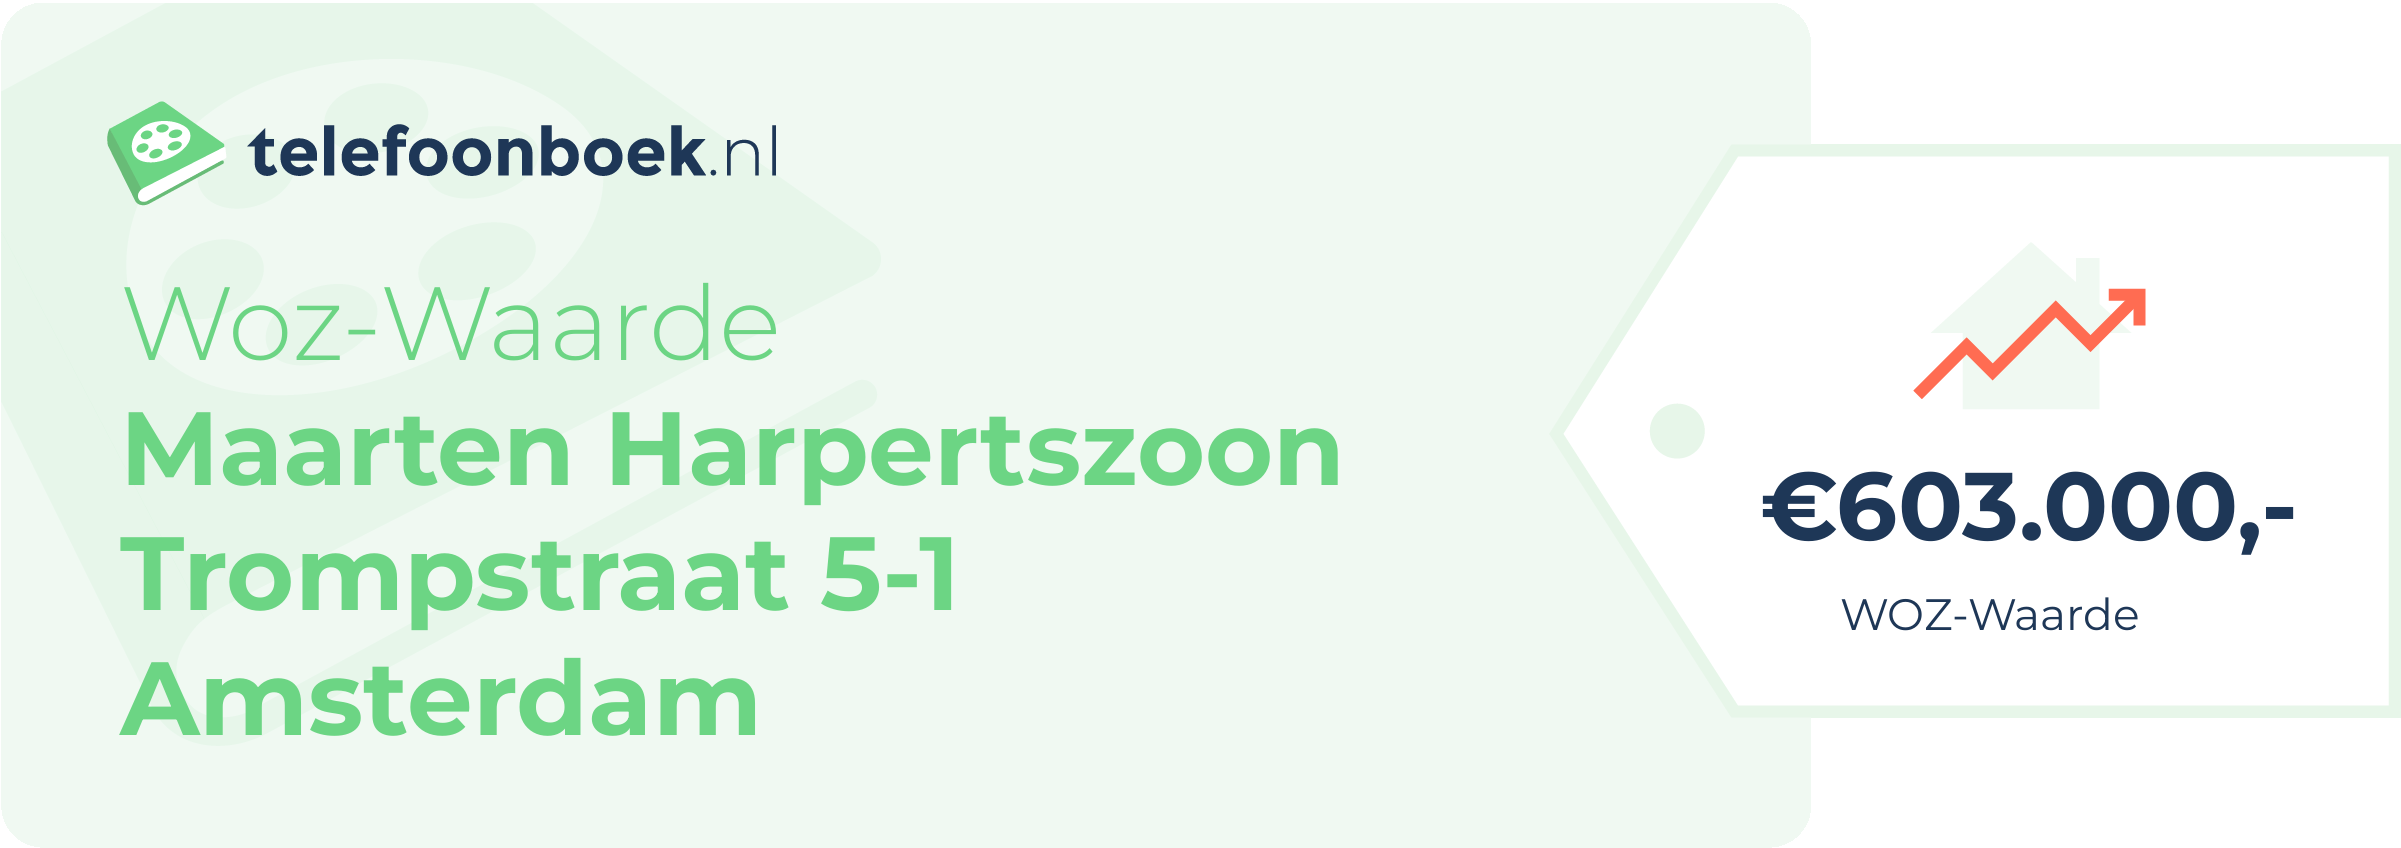 WOZ-waarde Maarten Harpertszoon Trompstraat 5-1 Amsterdam